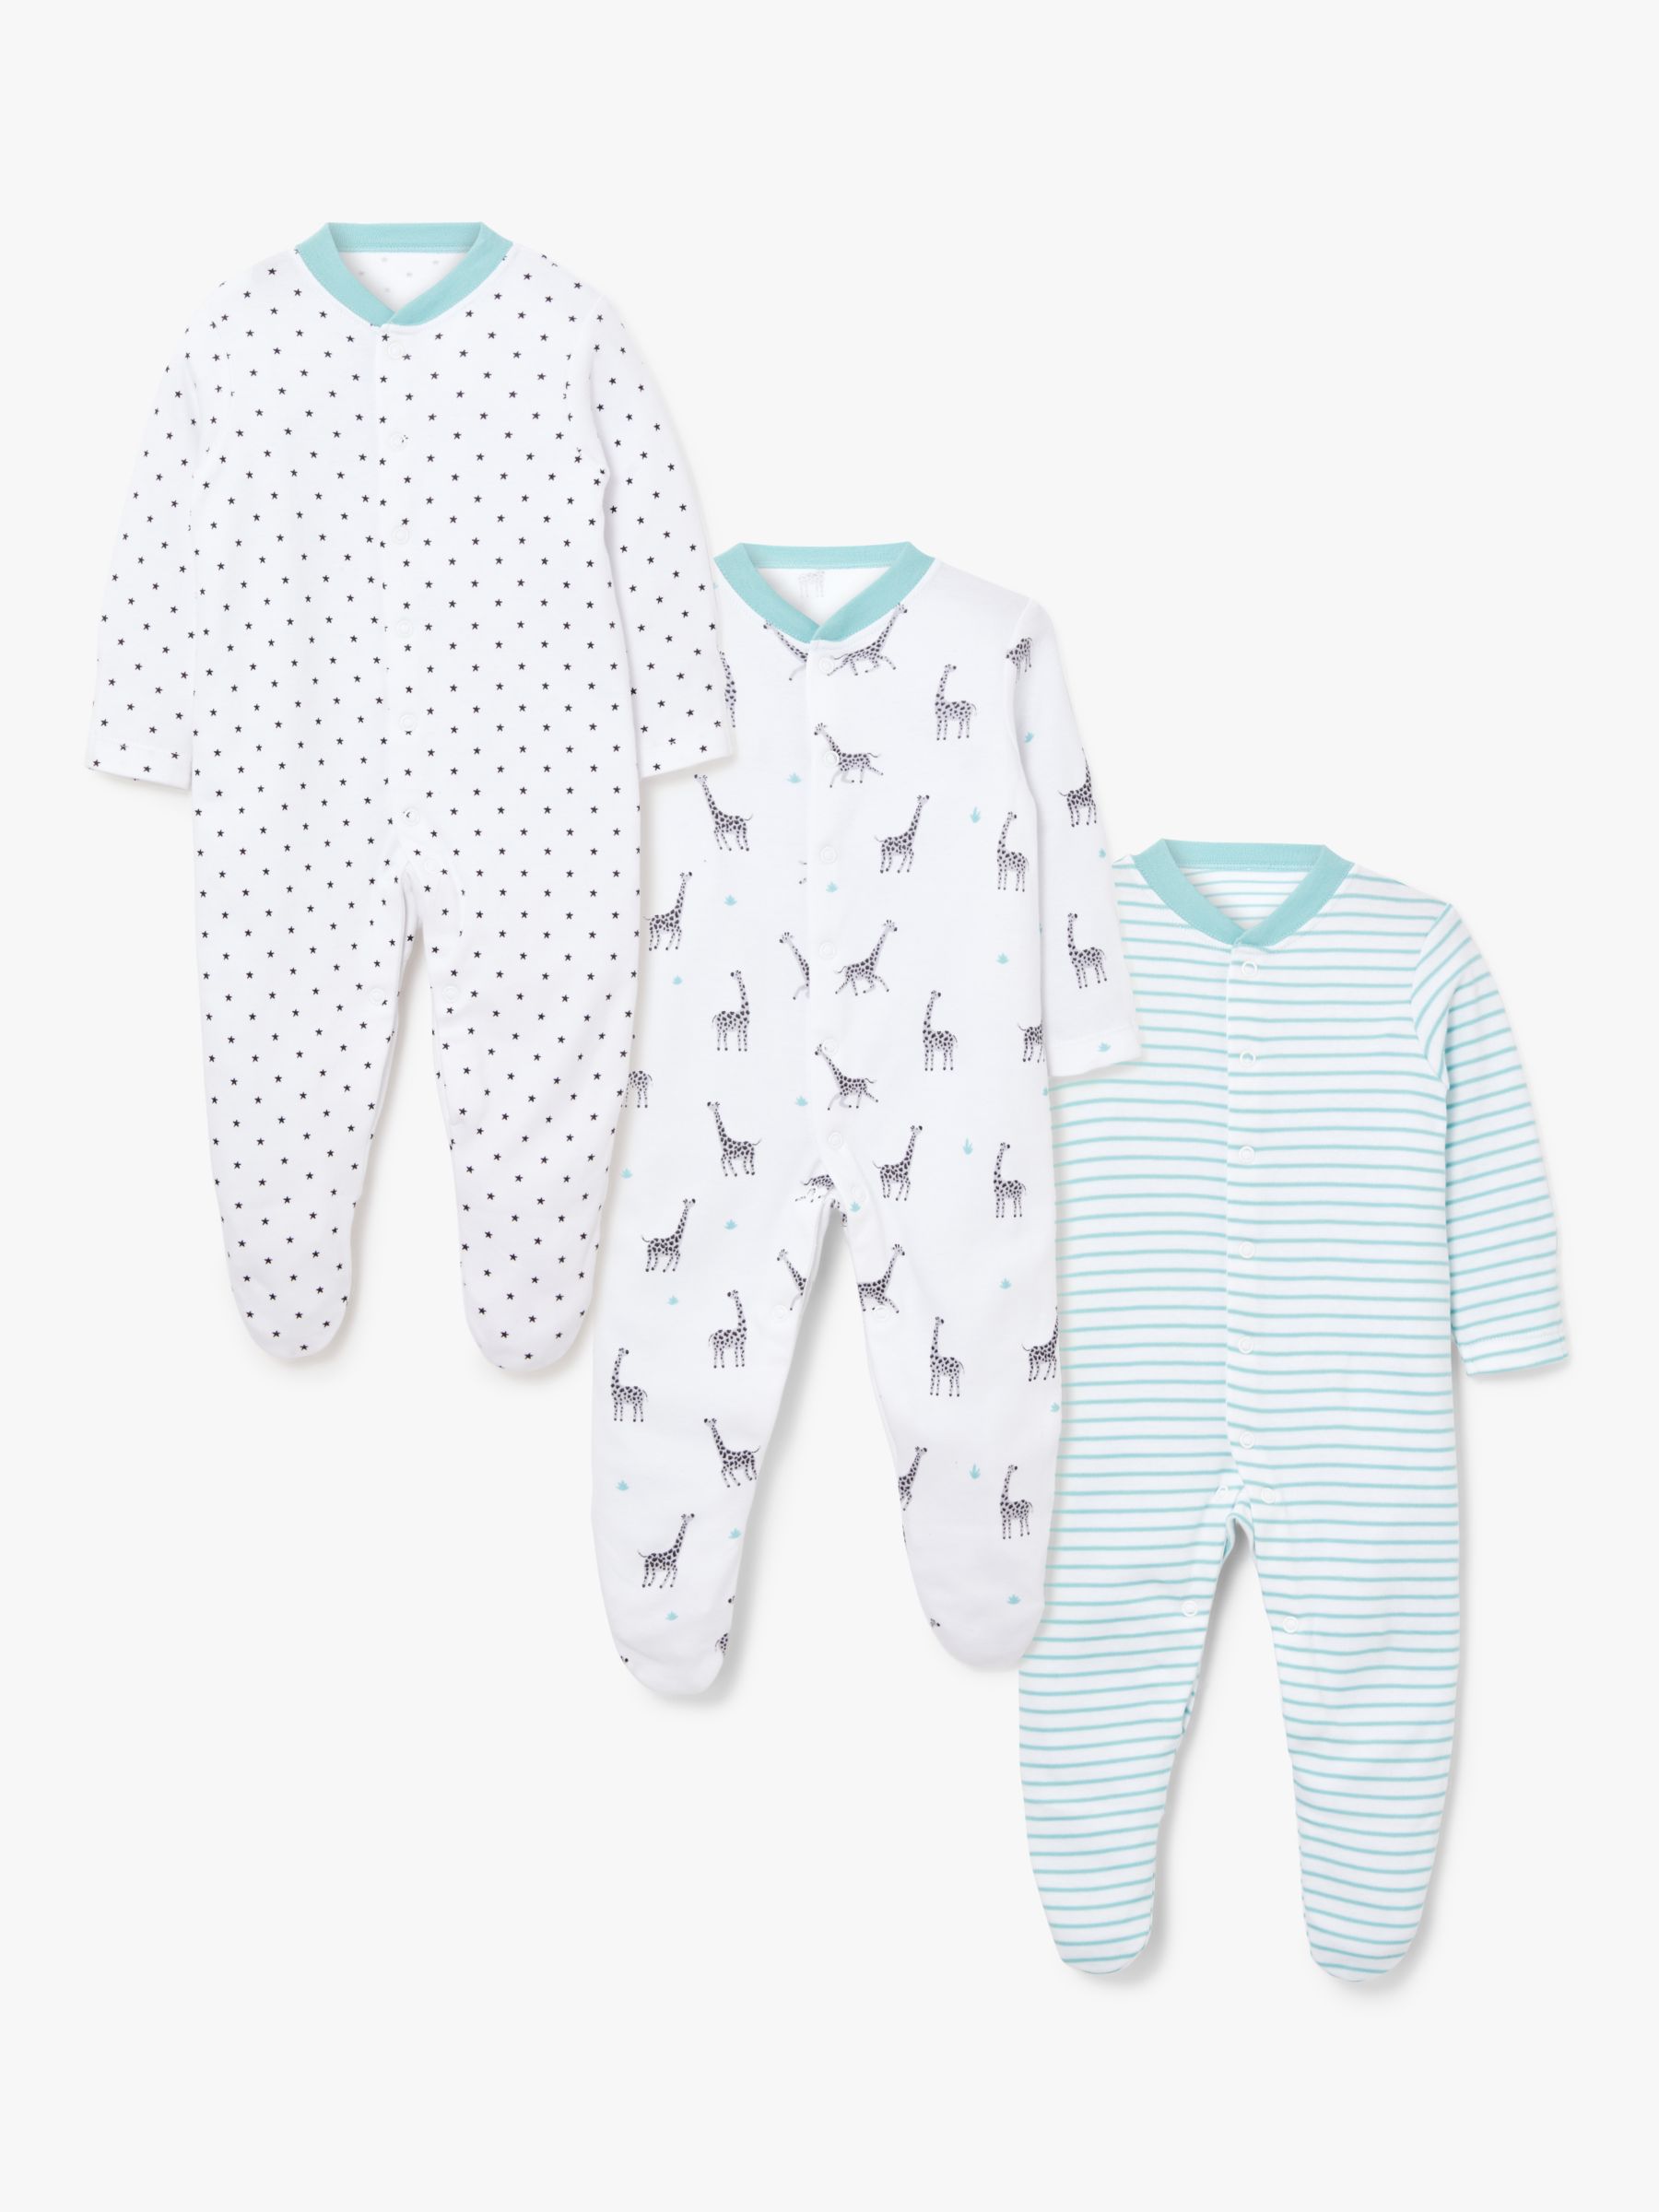 John Lewis ANYDAY Baby GOTS Organic Cotton Giraffe Sleepsuit, Pack of 3, Multi